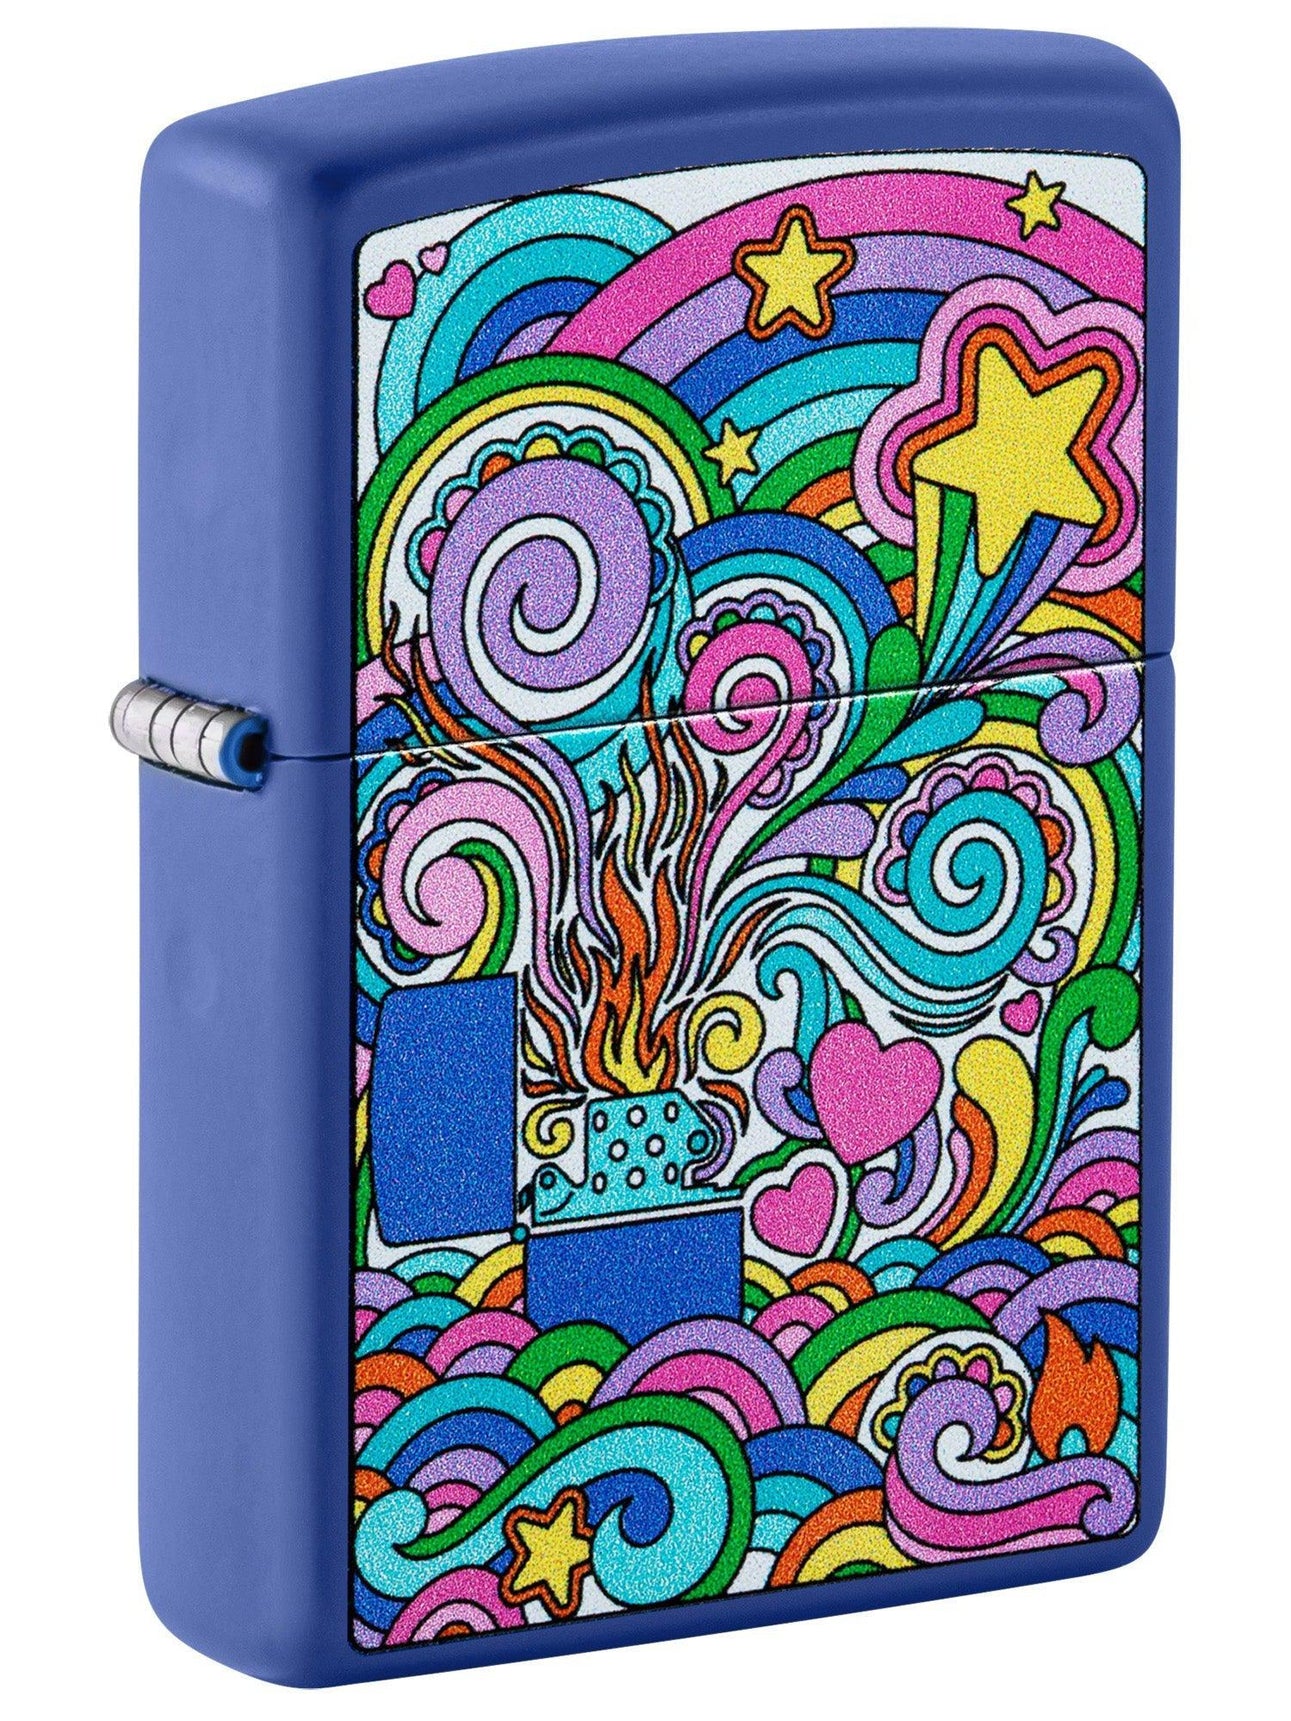 Zippo Lighter: Abstract Zippo Design - Royal Blue Matte 48955